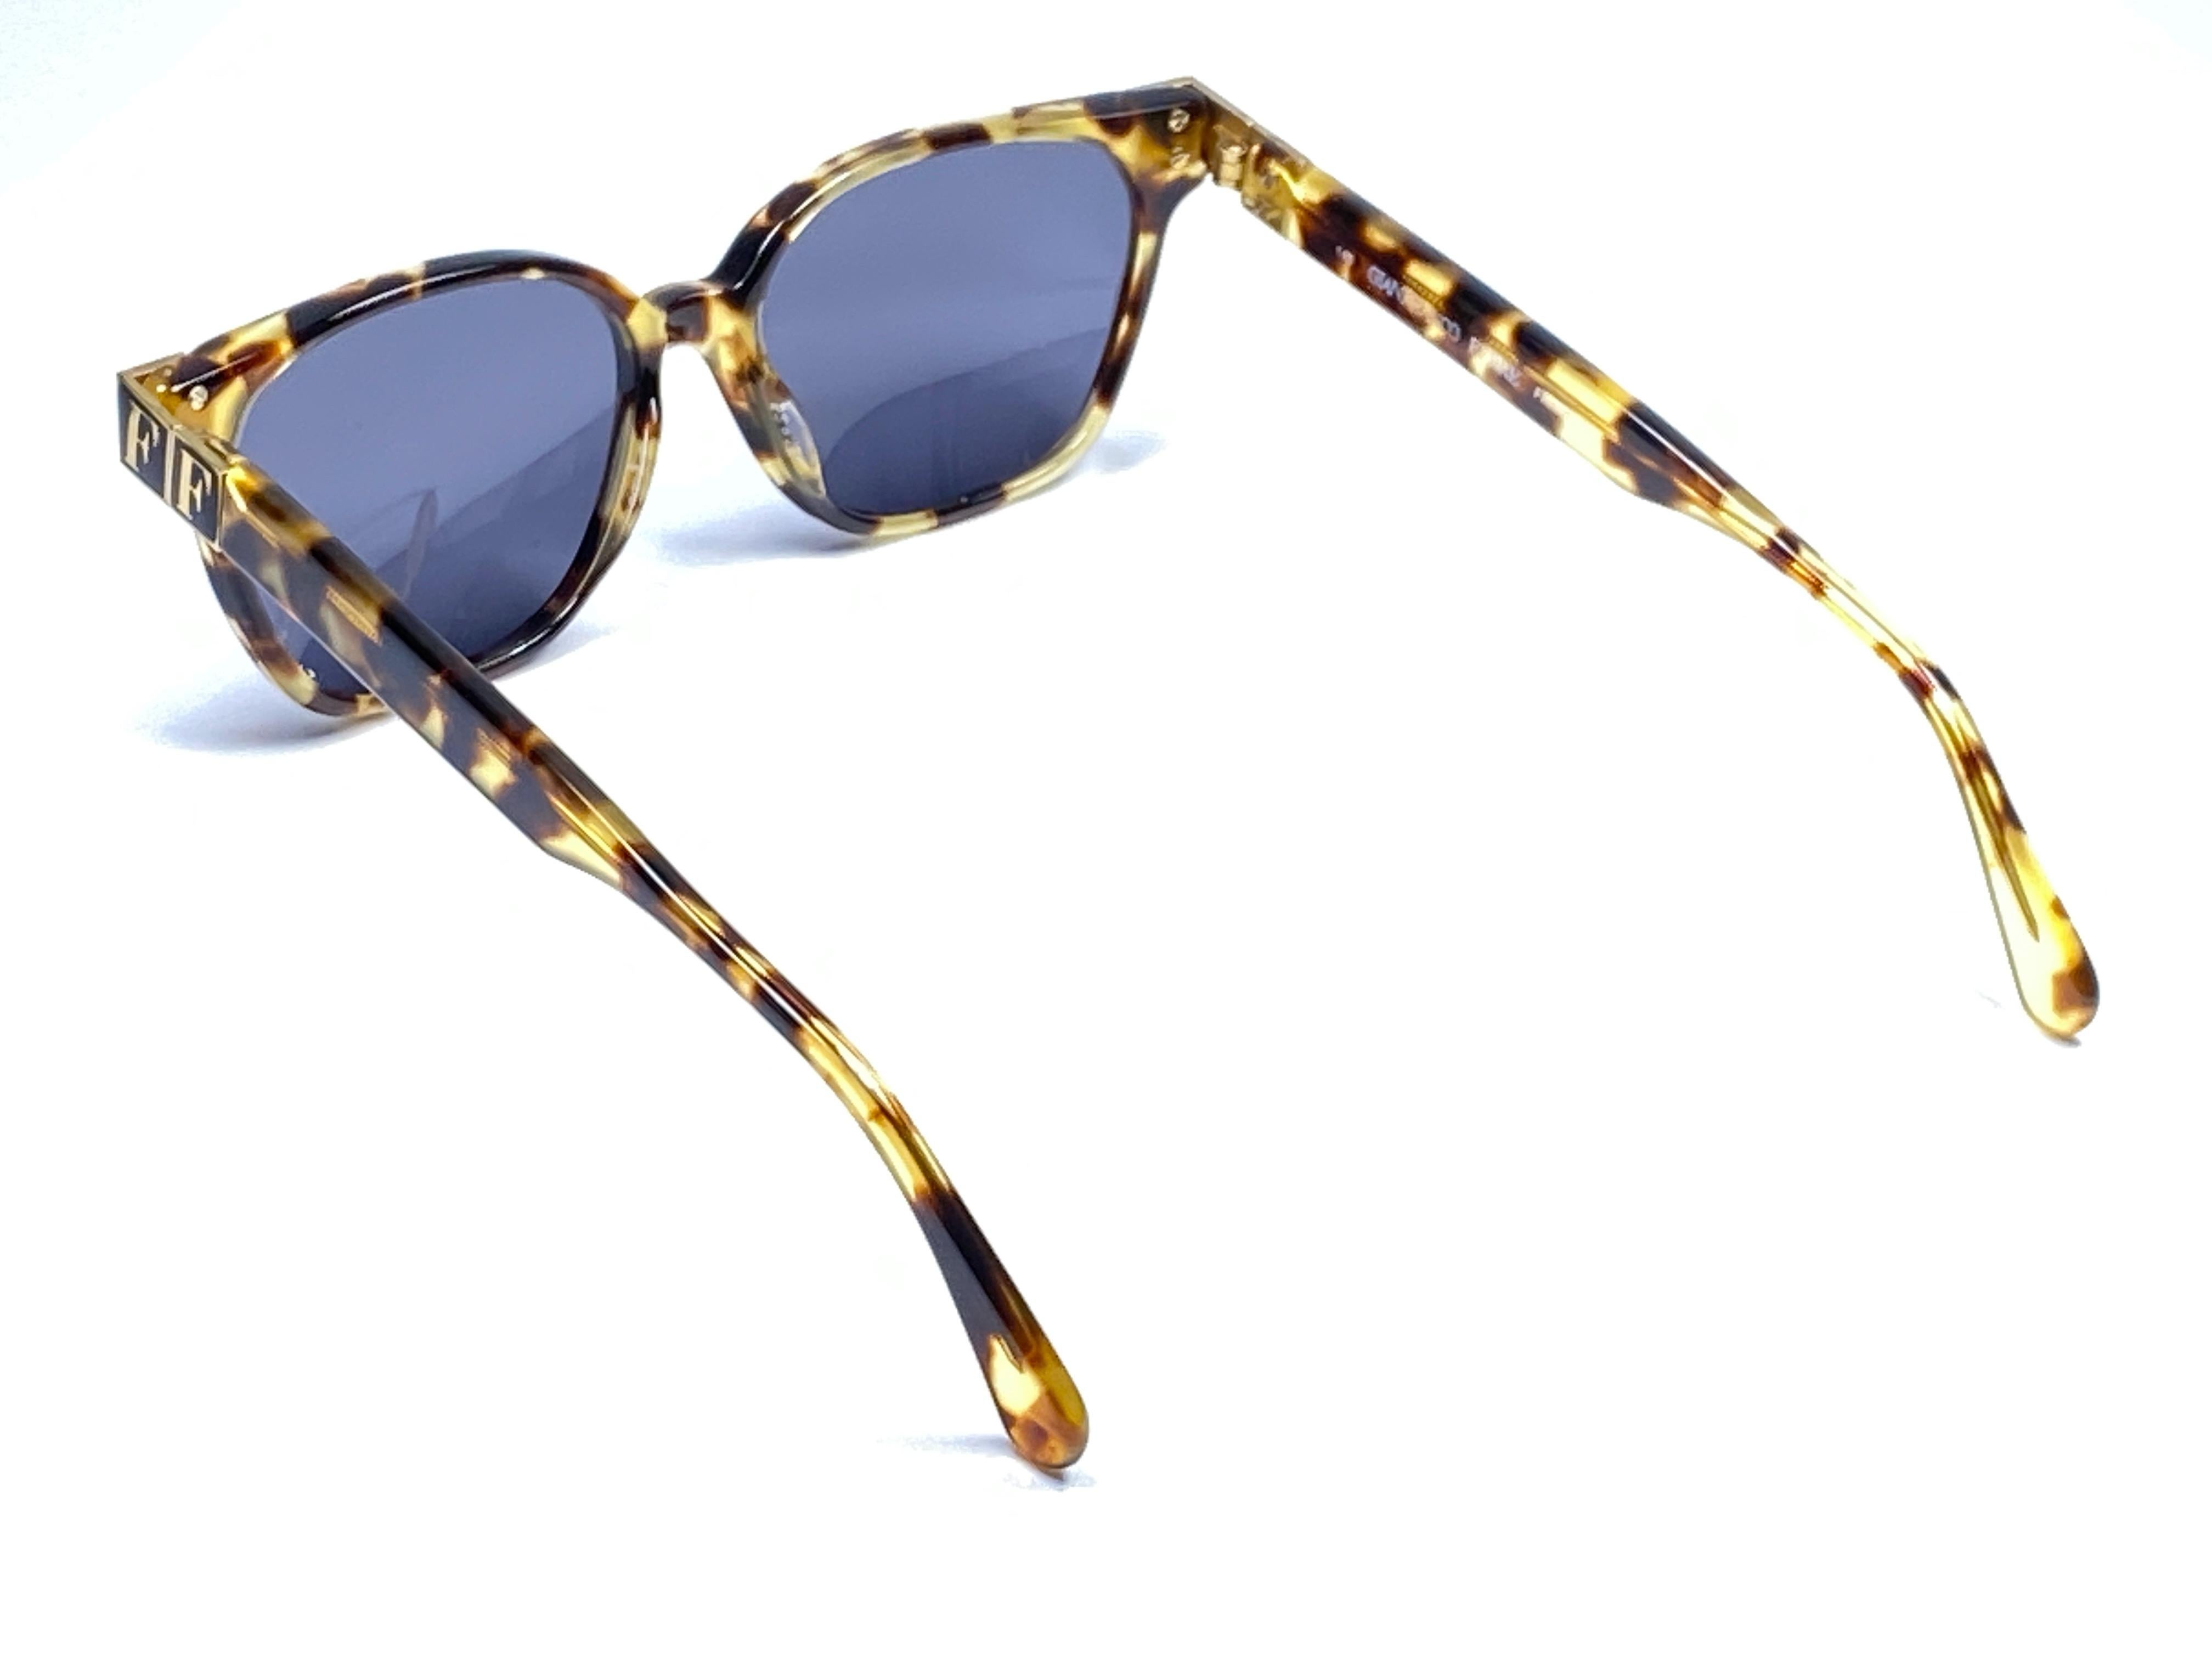 New Vintage Gianfranco Ferré GFF 105 Gold / Tortoise 1990 Italy Sunglasses For Sale 1